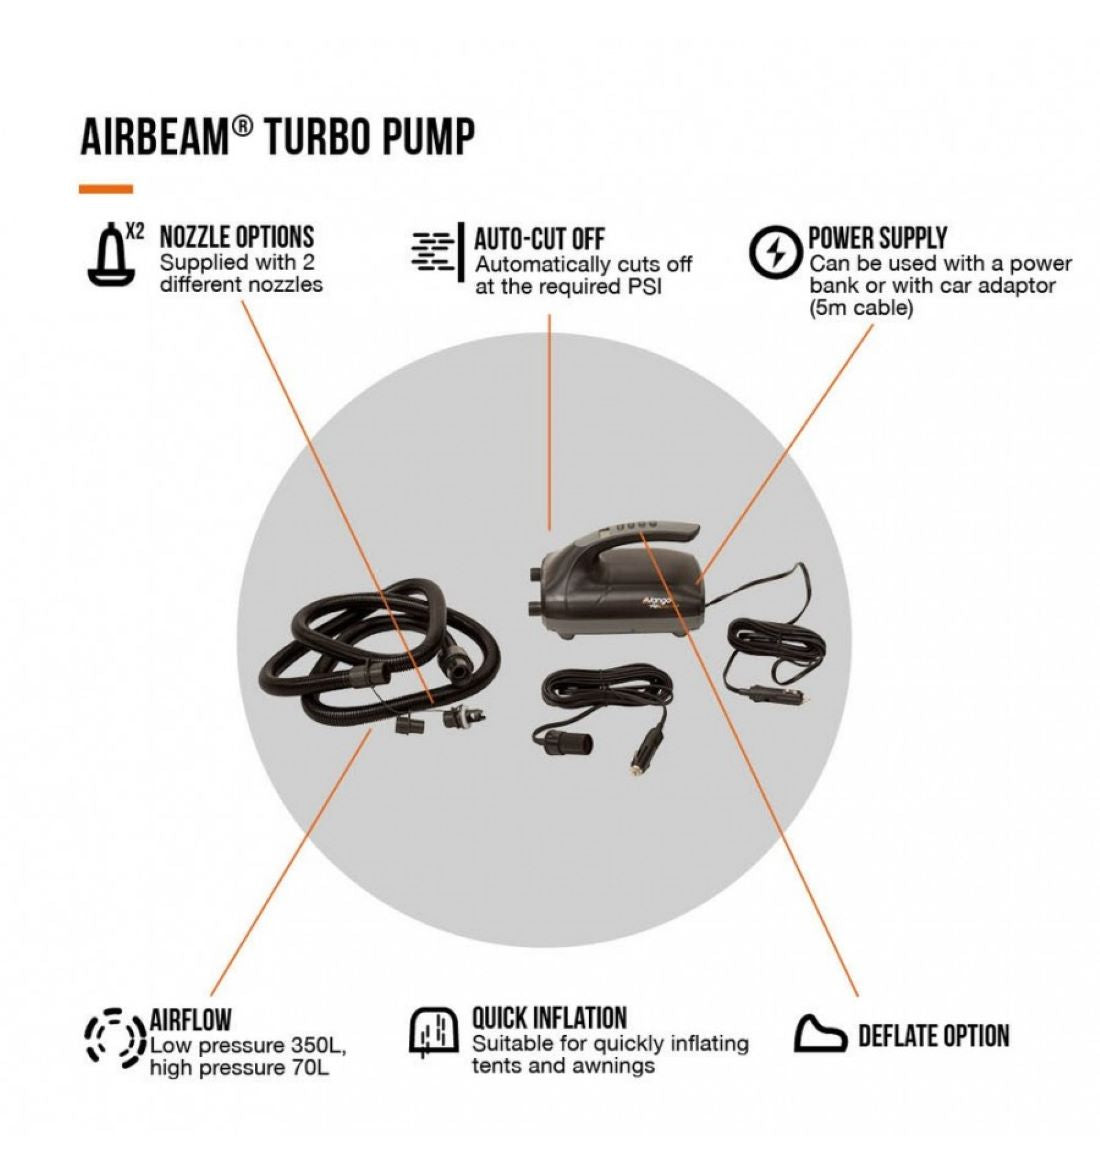 Vango Airbeam Turbo Pump - Powerful Camping Pump